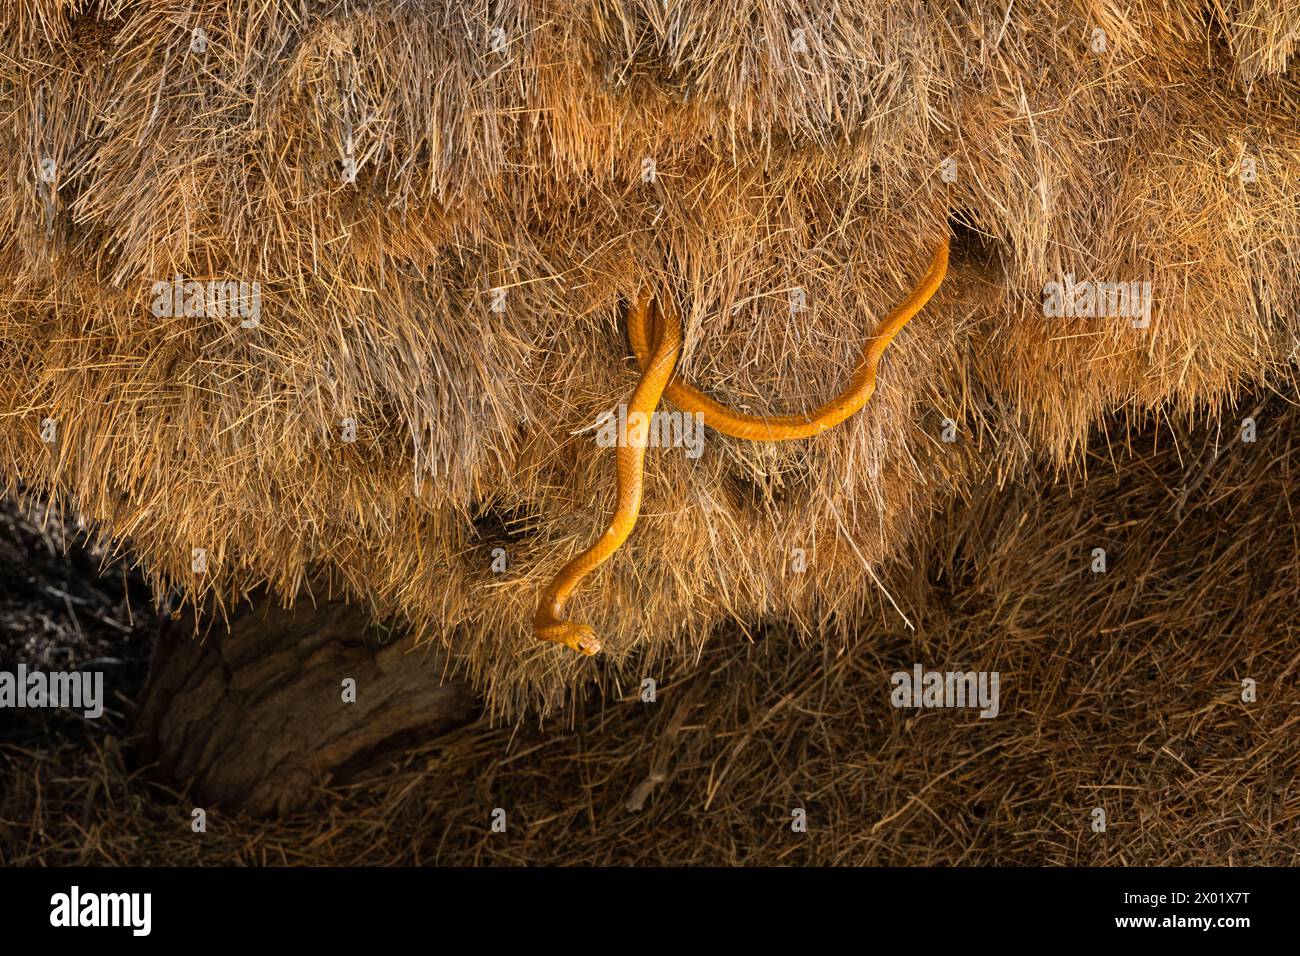 Cape cobra (Naja nivea) hunting in sociable weaver (Philetairus socius) nest, Kgalagadi transfrontier park, Northern Cape, South Africa Stock Photo